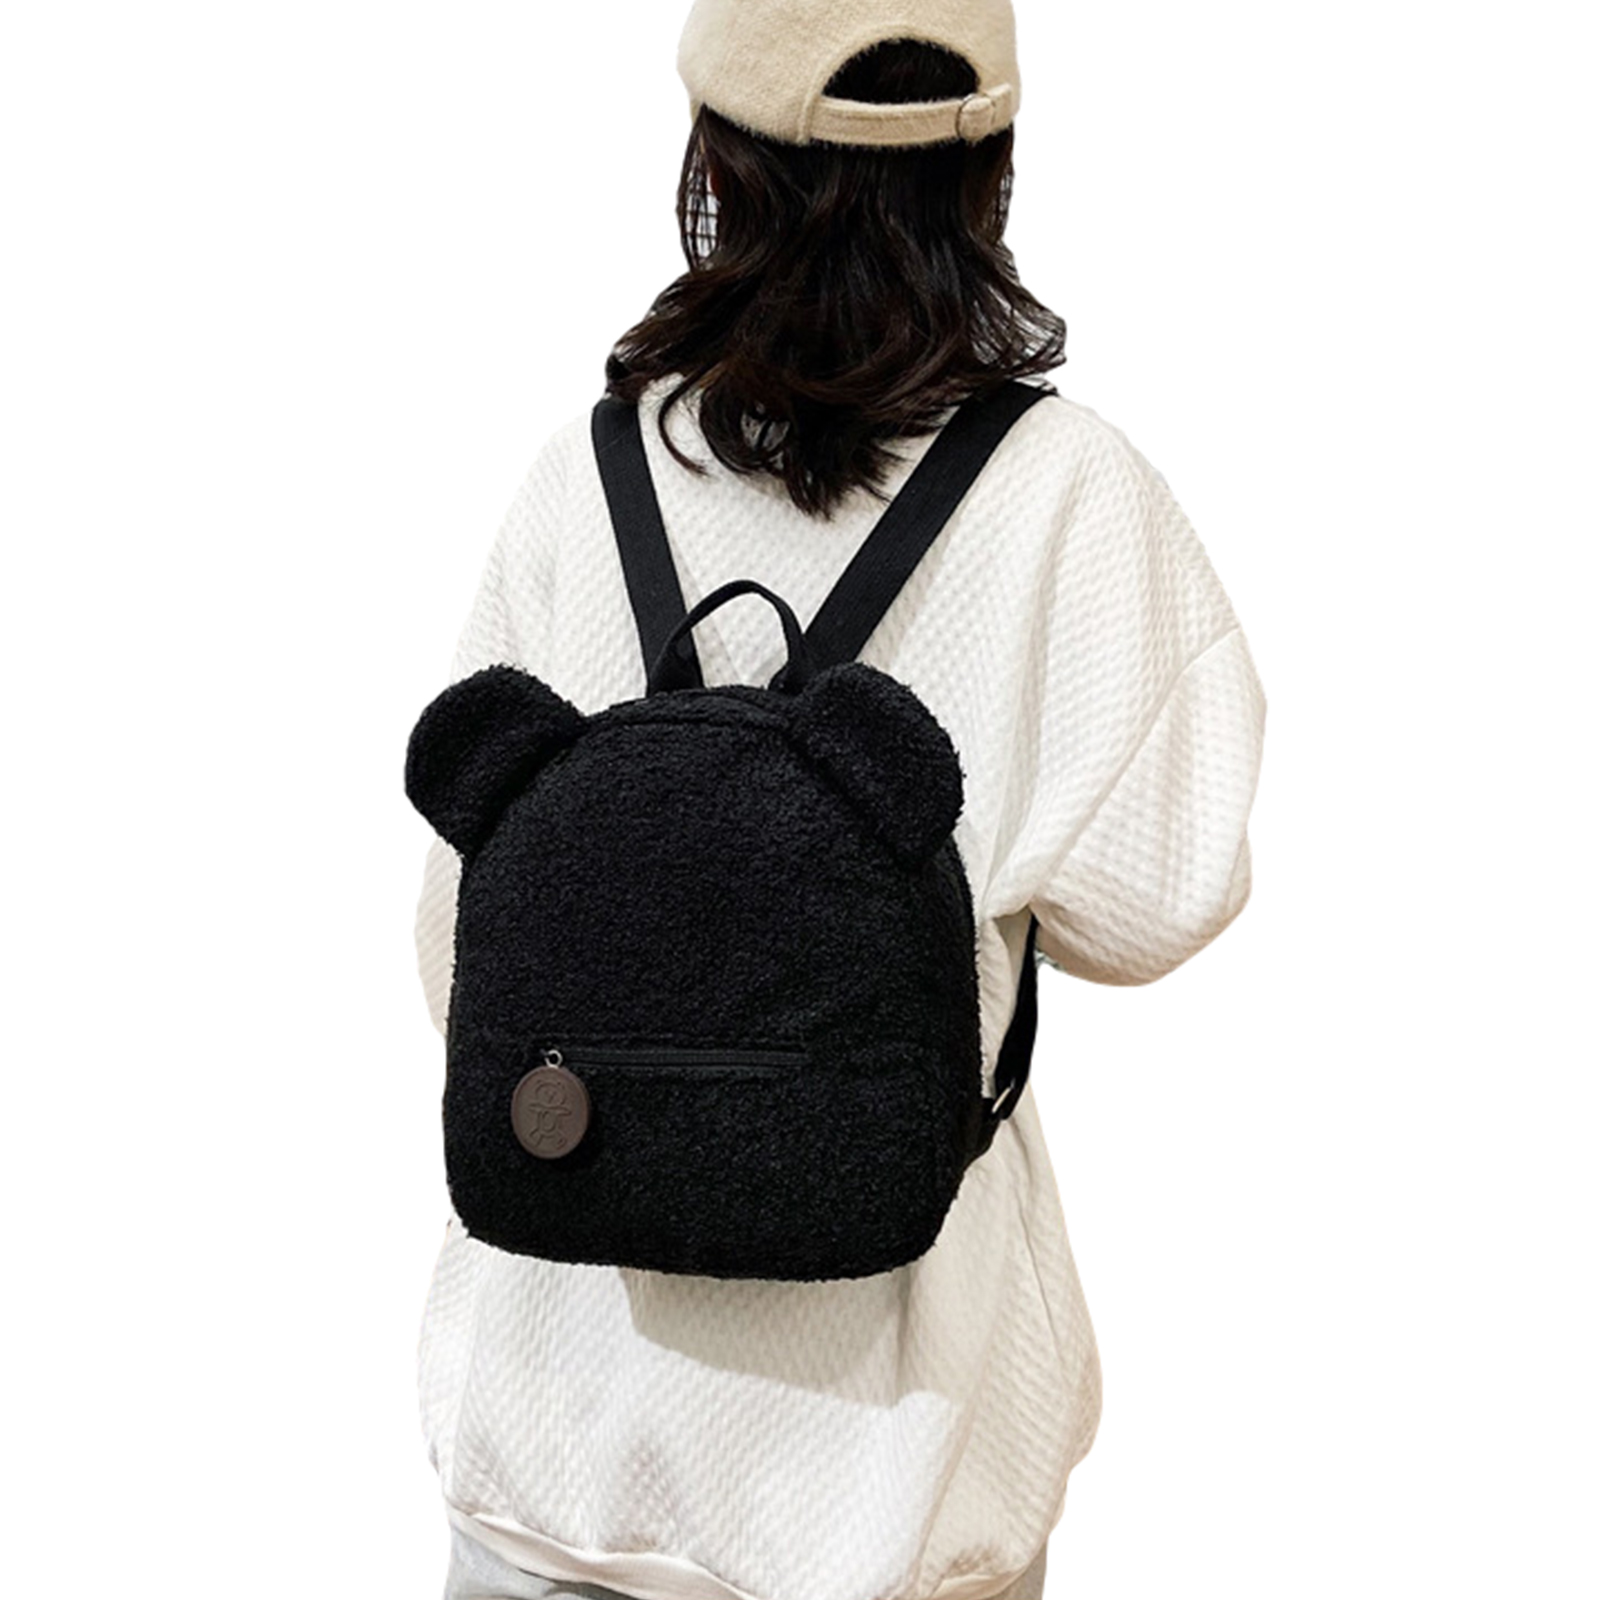 Multitrust Women Girls Cute Bear Ear Fleece Solid Color Small Backpack Daypack - image 1 of 4